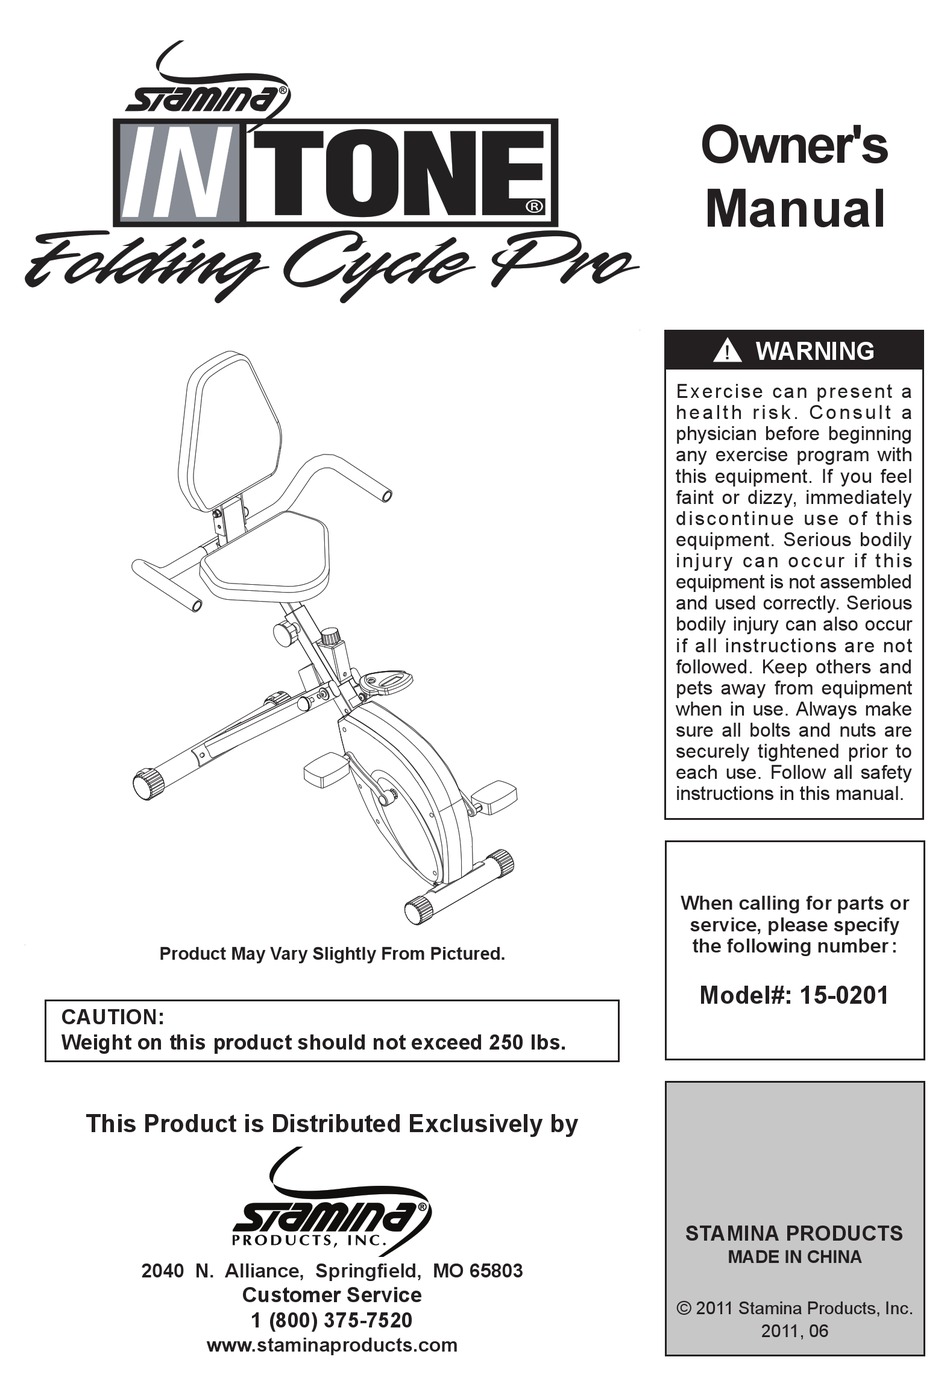 stamina intone folding cycle pro